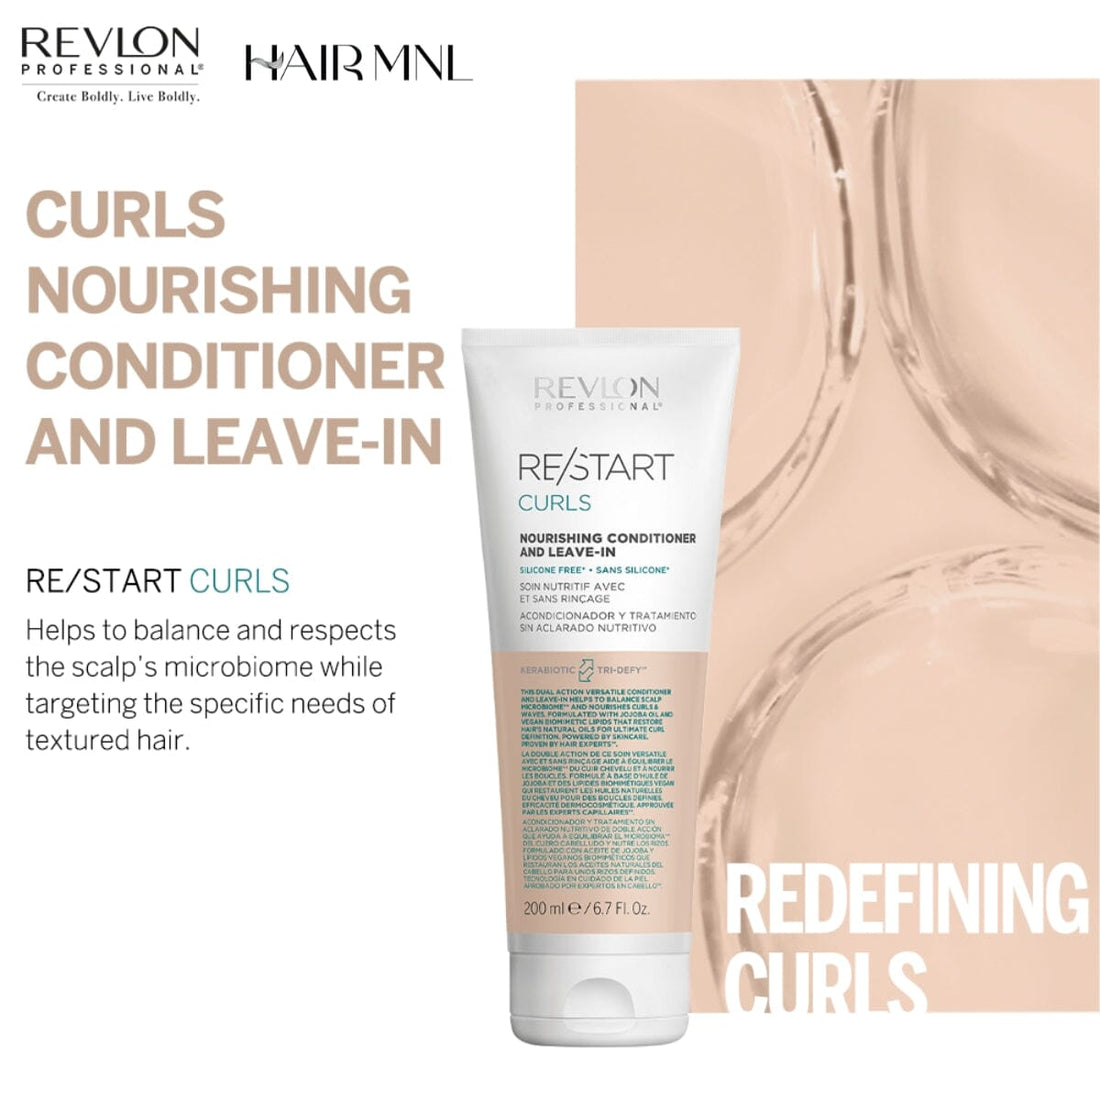 HairMNL Revlon Professional ReStart Curls Nourishing Conditioner and Leave-In 200ml Benefits